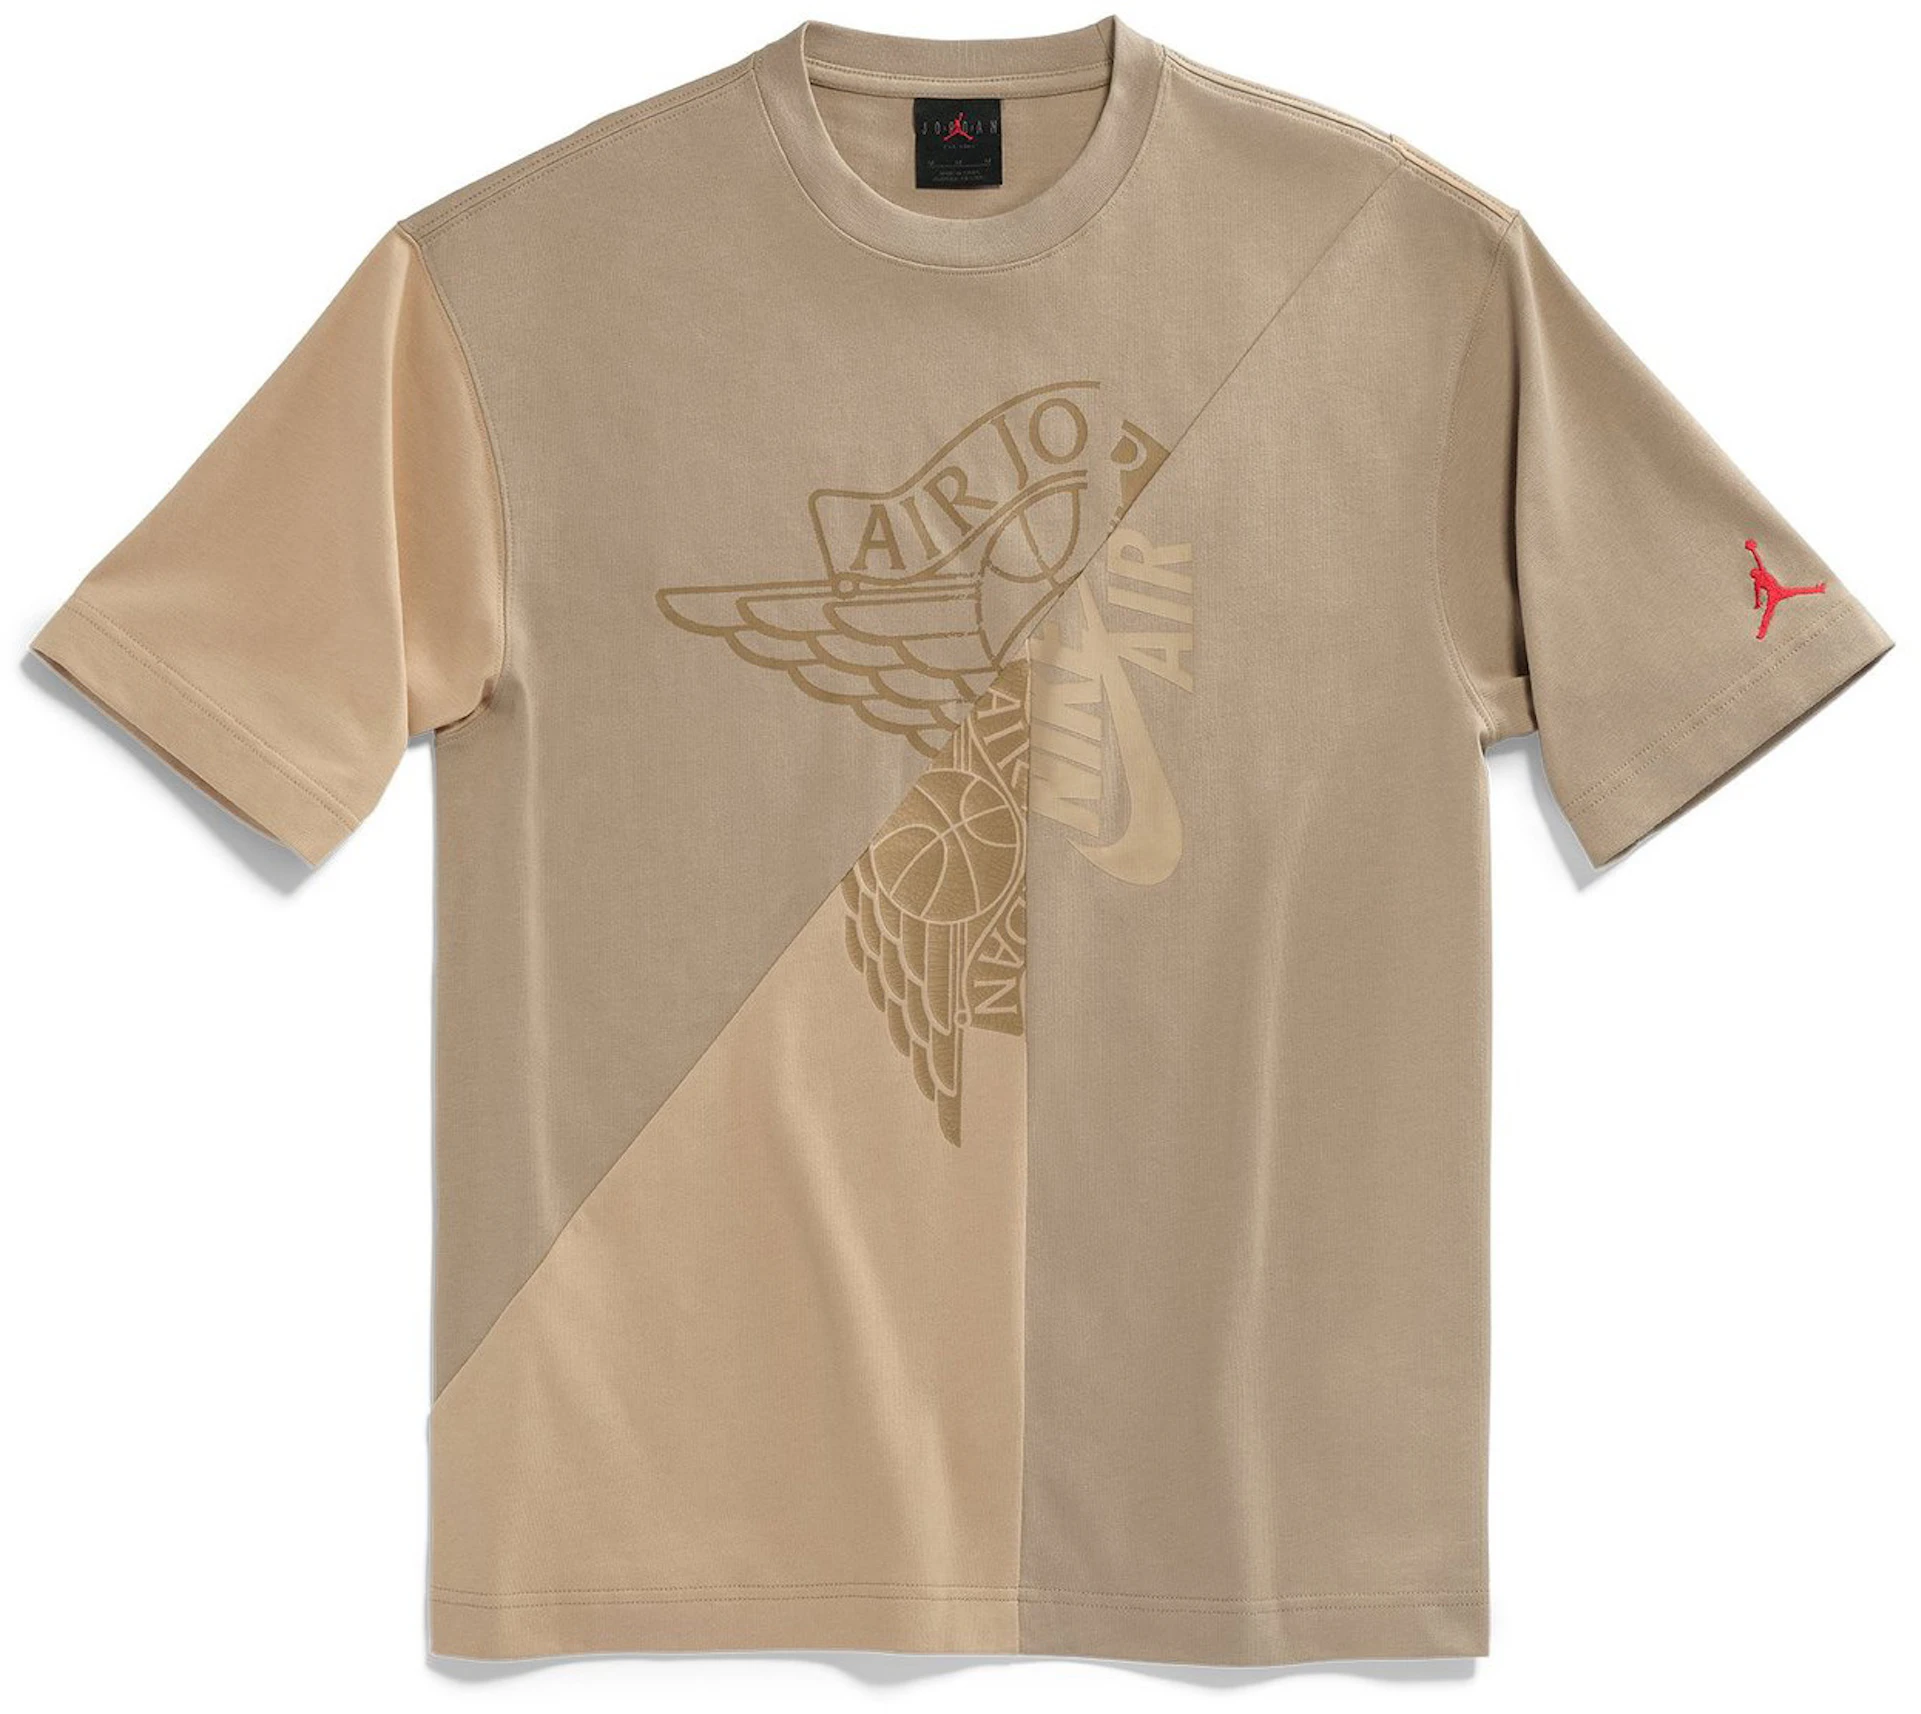 Travis Cactus Jack x Jordan T-shirt Khaki/Desert - SS21 ES